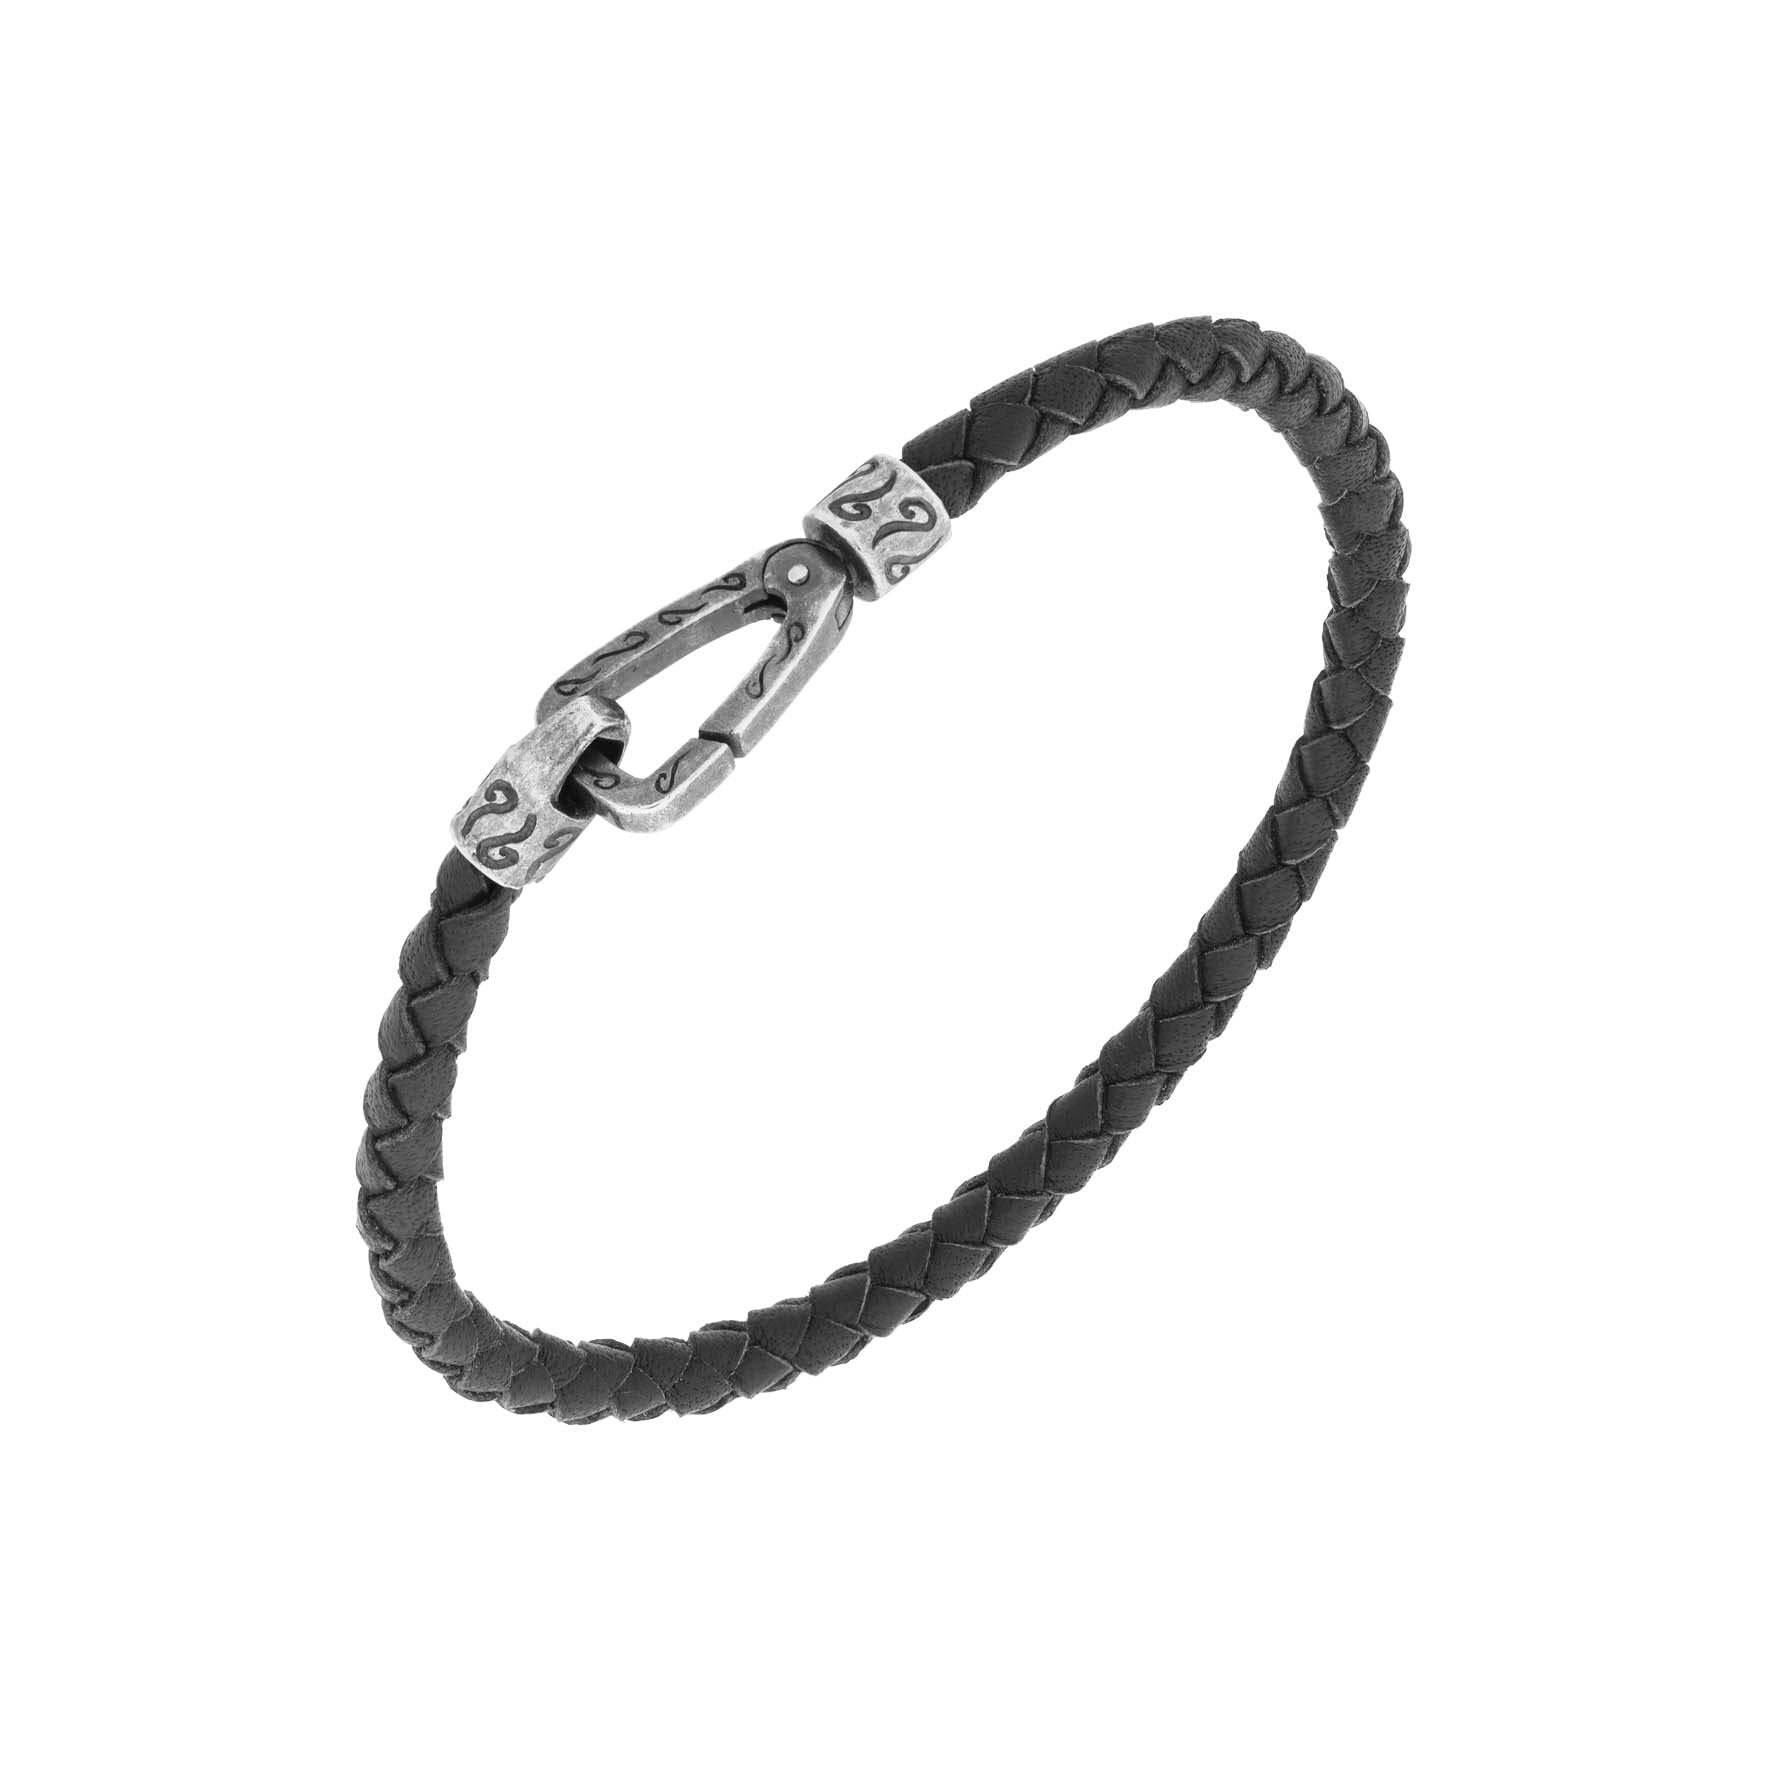 Lash Woven Bracelet. Oxidized Silver. Black Woven Leather